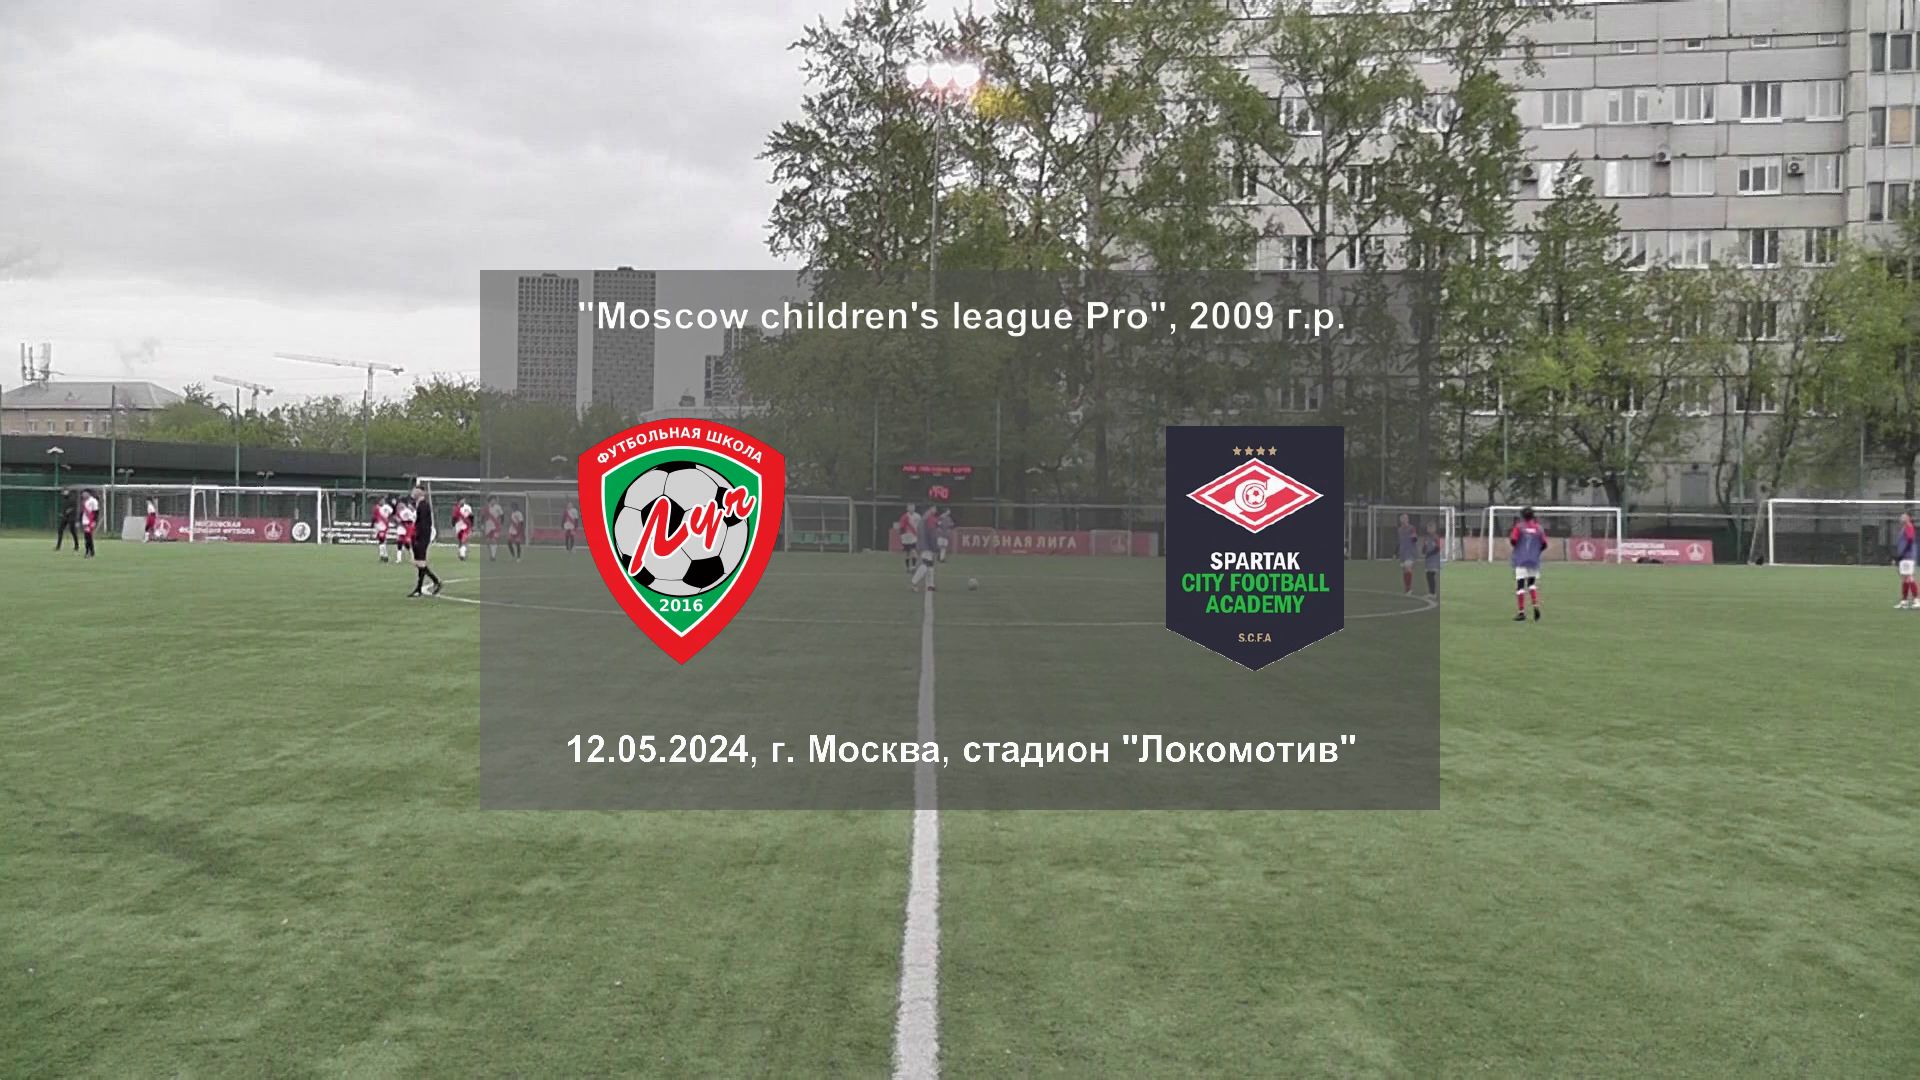 12.05.2024, "Moscow children's league Pro", 2009 г.р., г. Москва, Ш "Луч" - "Spartak City Football".